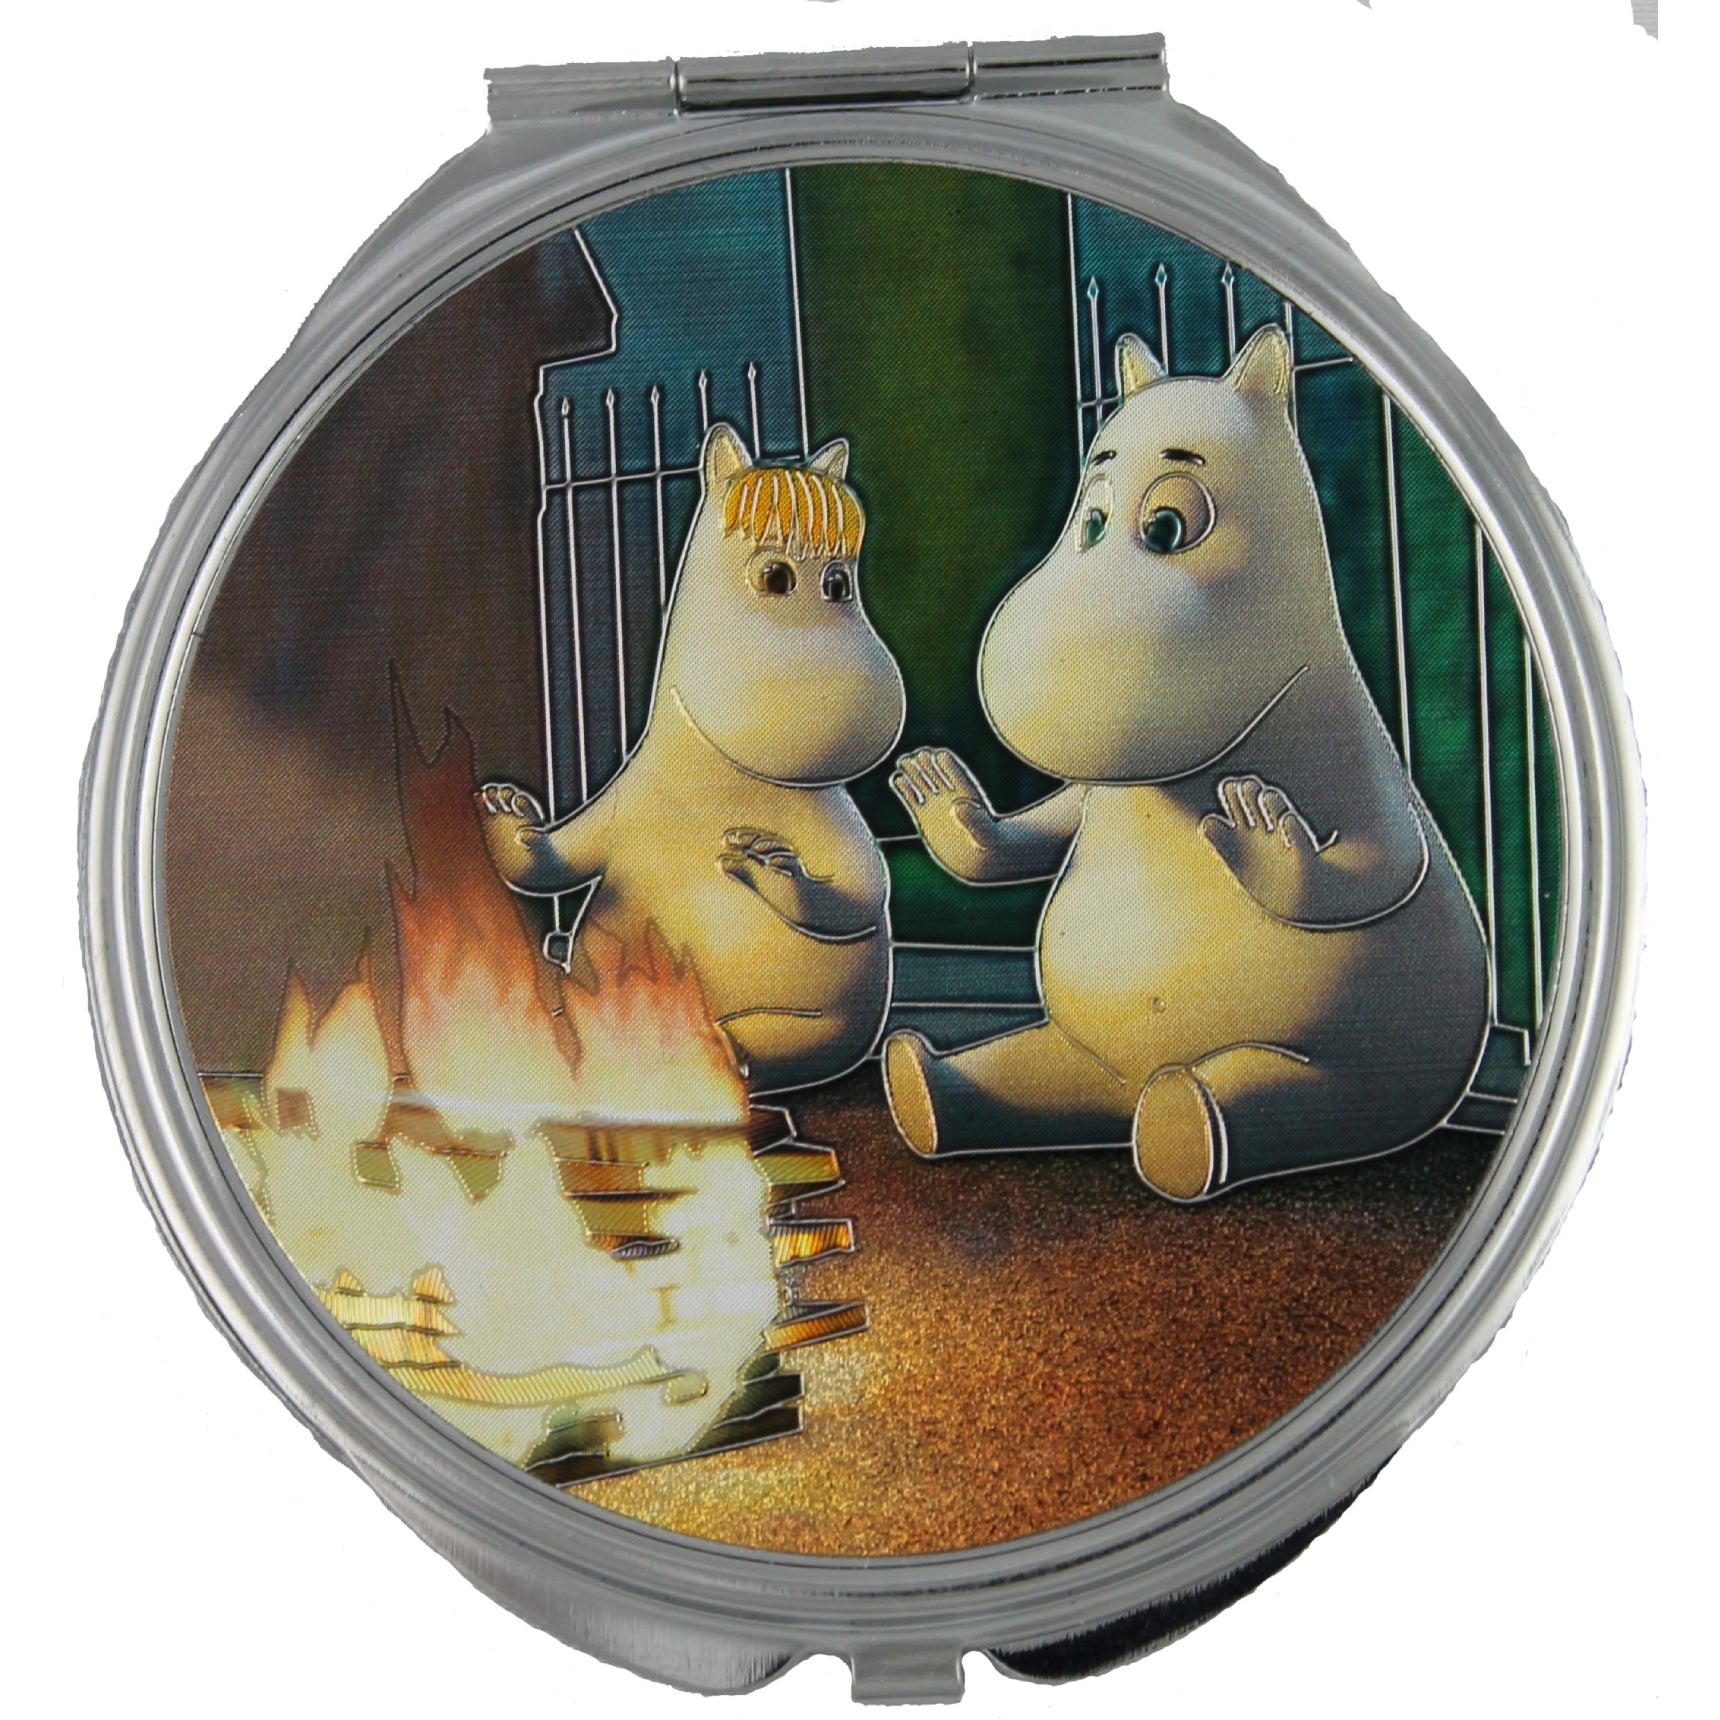 Moomin Glittering Mirror Box - TMF Trade - The Official Moomin Shop